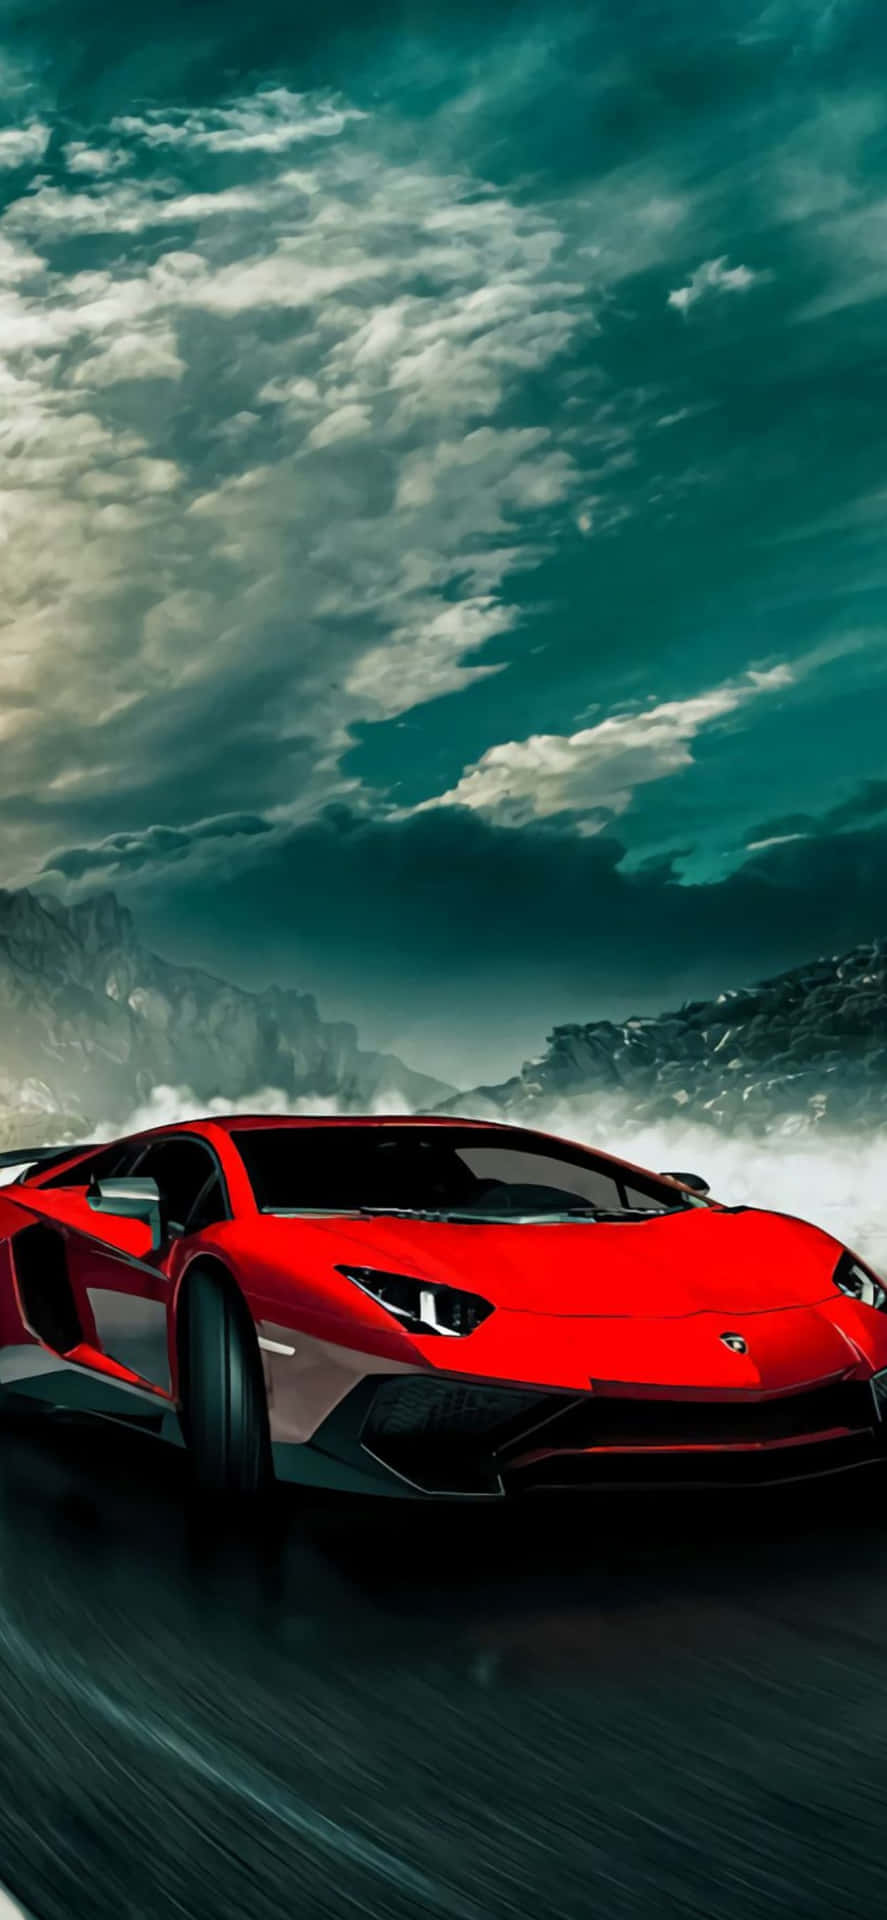 Iphonexs Max Lamborghini Red Aventador Bakgrundsbild